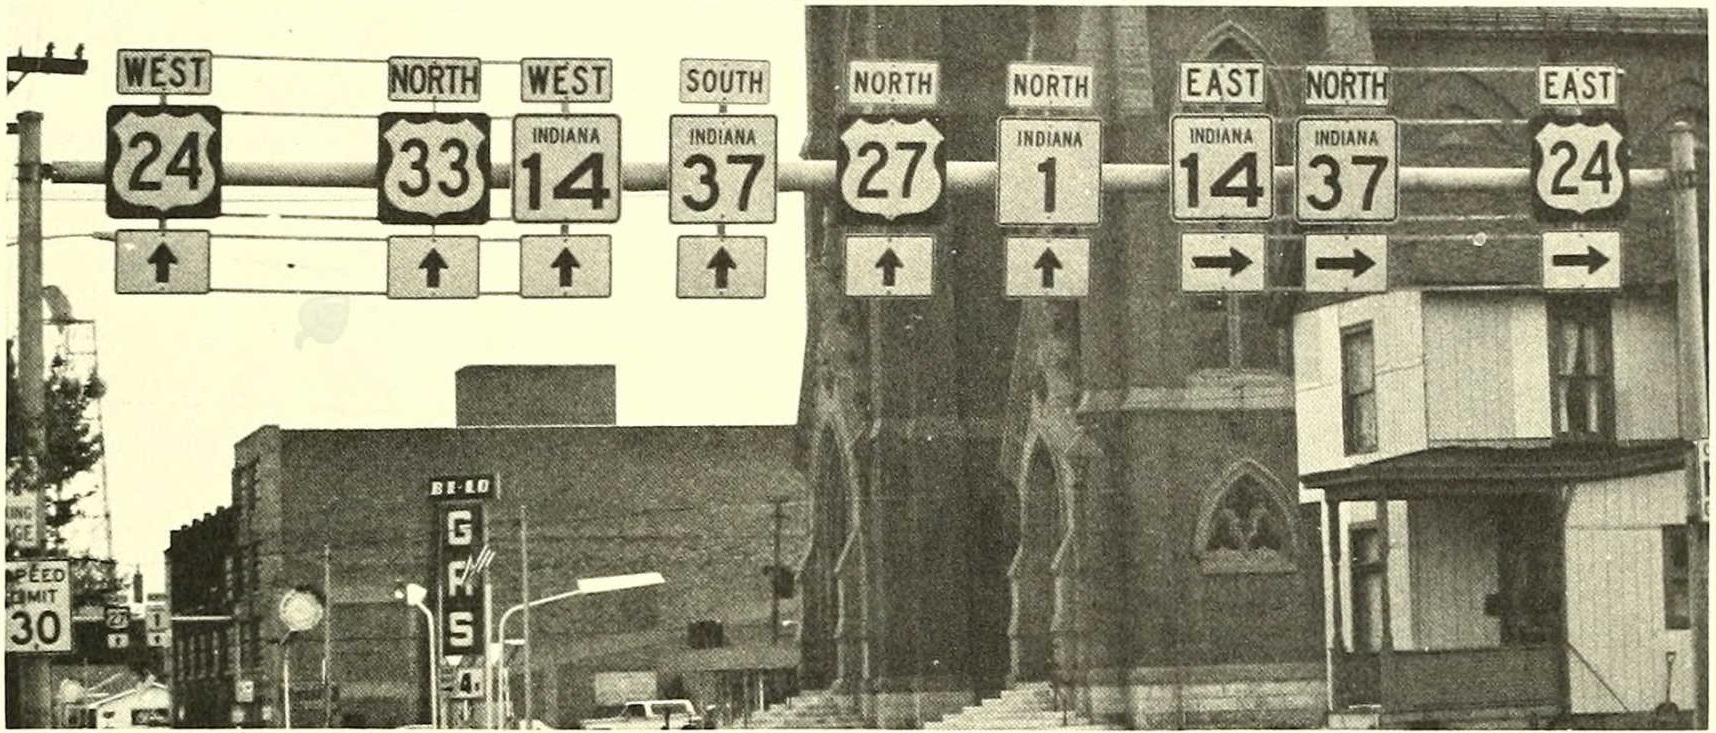 1976 Street Signs